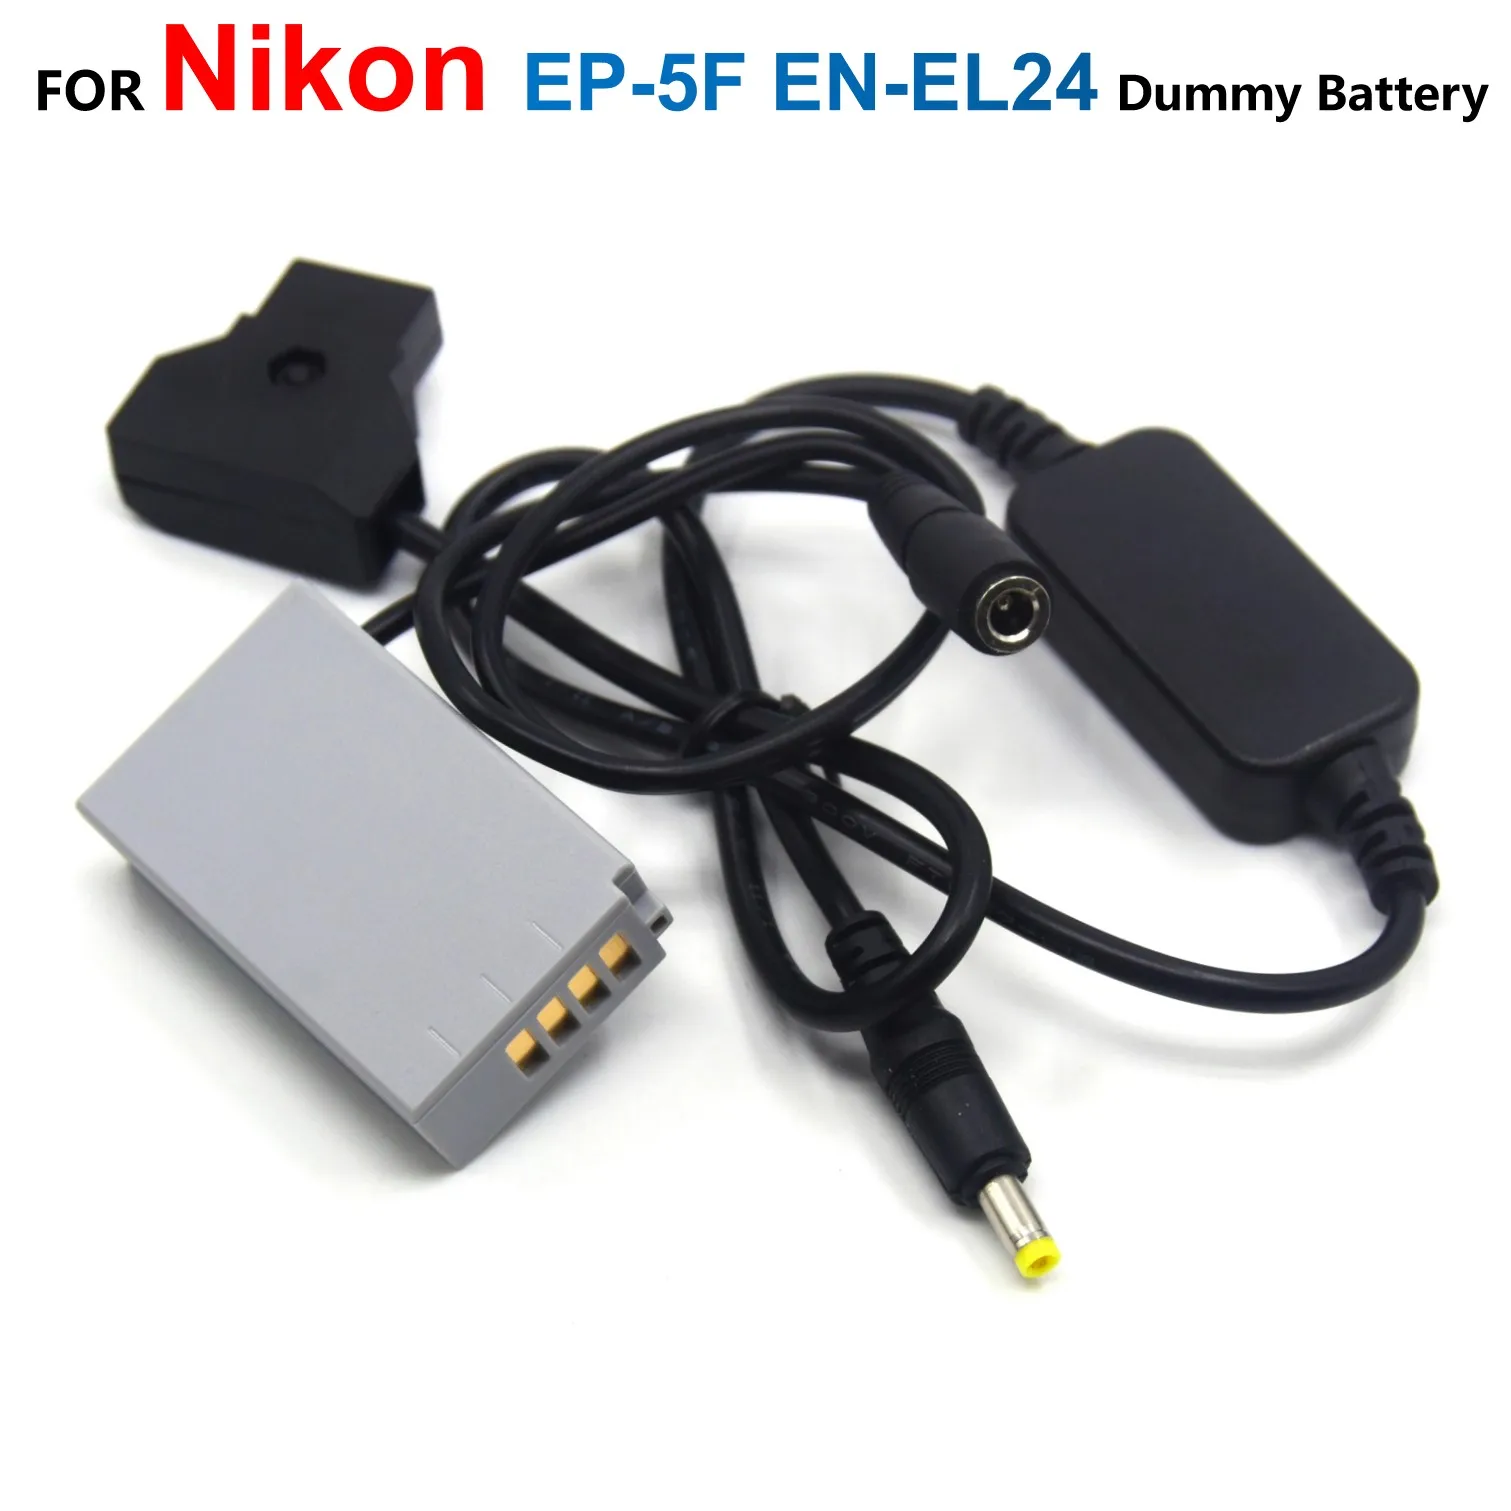 

EP-5F DC Coupler EN-EL24 Dummy Battery + D-TAP Dtap 12-24V To 9V Power Step-Down Cable EH-5A For Nikon 1 J5 1J5 Camera